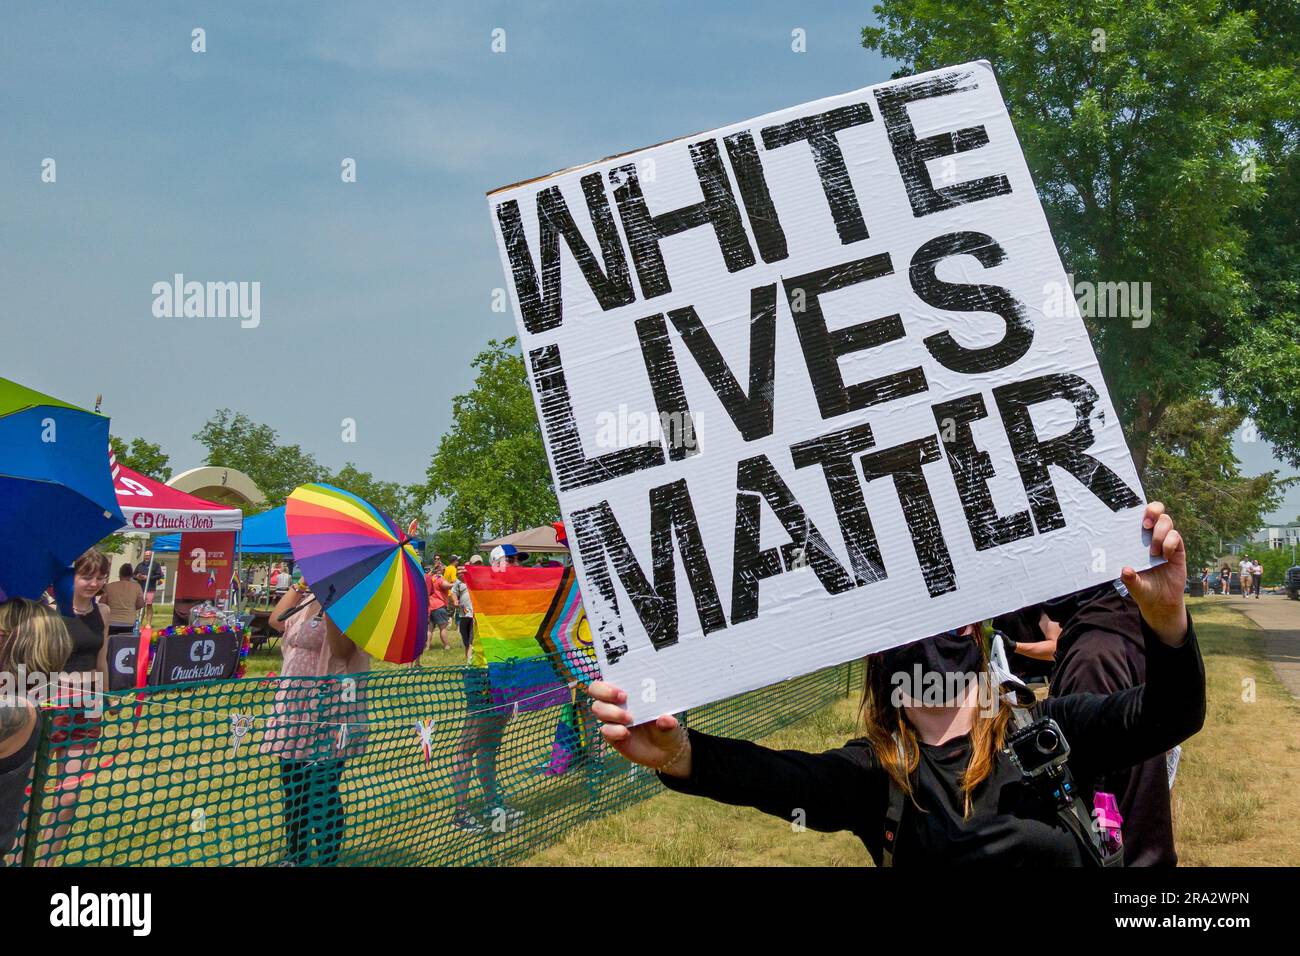 HUDSON, WI, USA - JUNE 17, 2023: Unidentified masked individual holding White Lives Matter banner at Hudson Pride celebration. Stock Photo